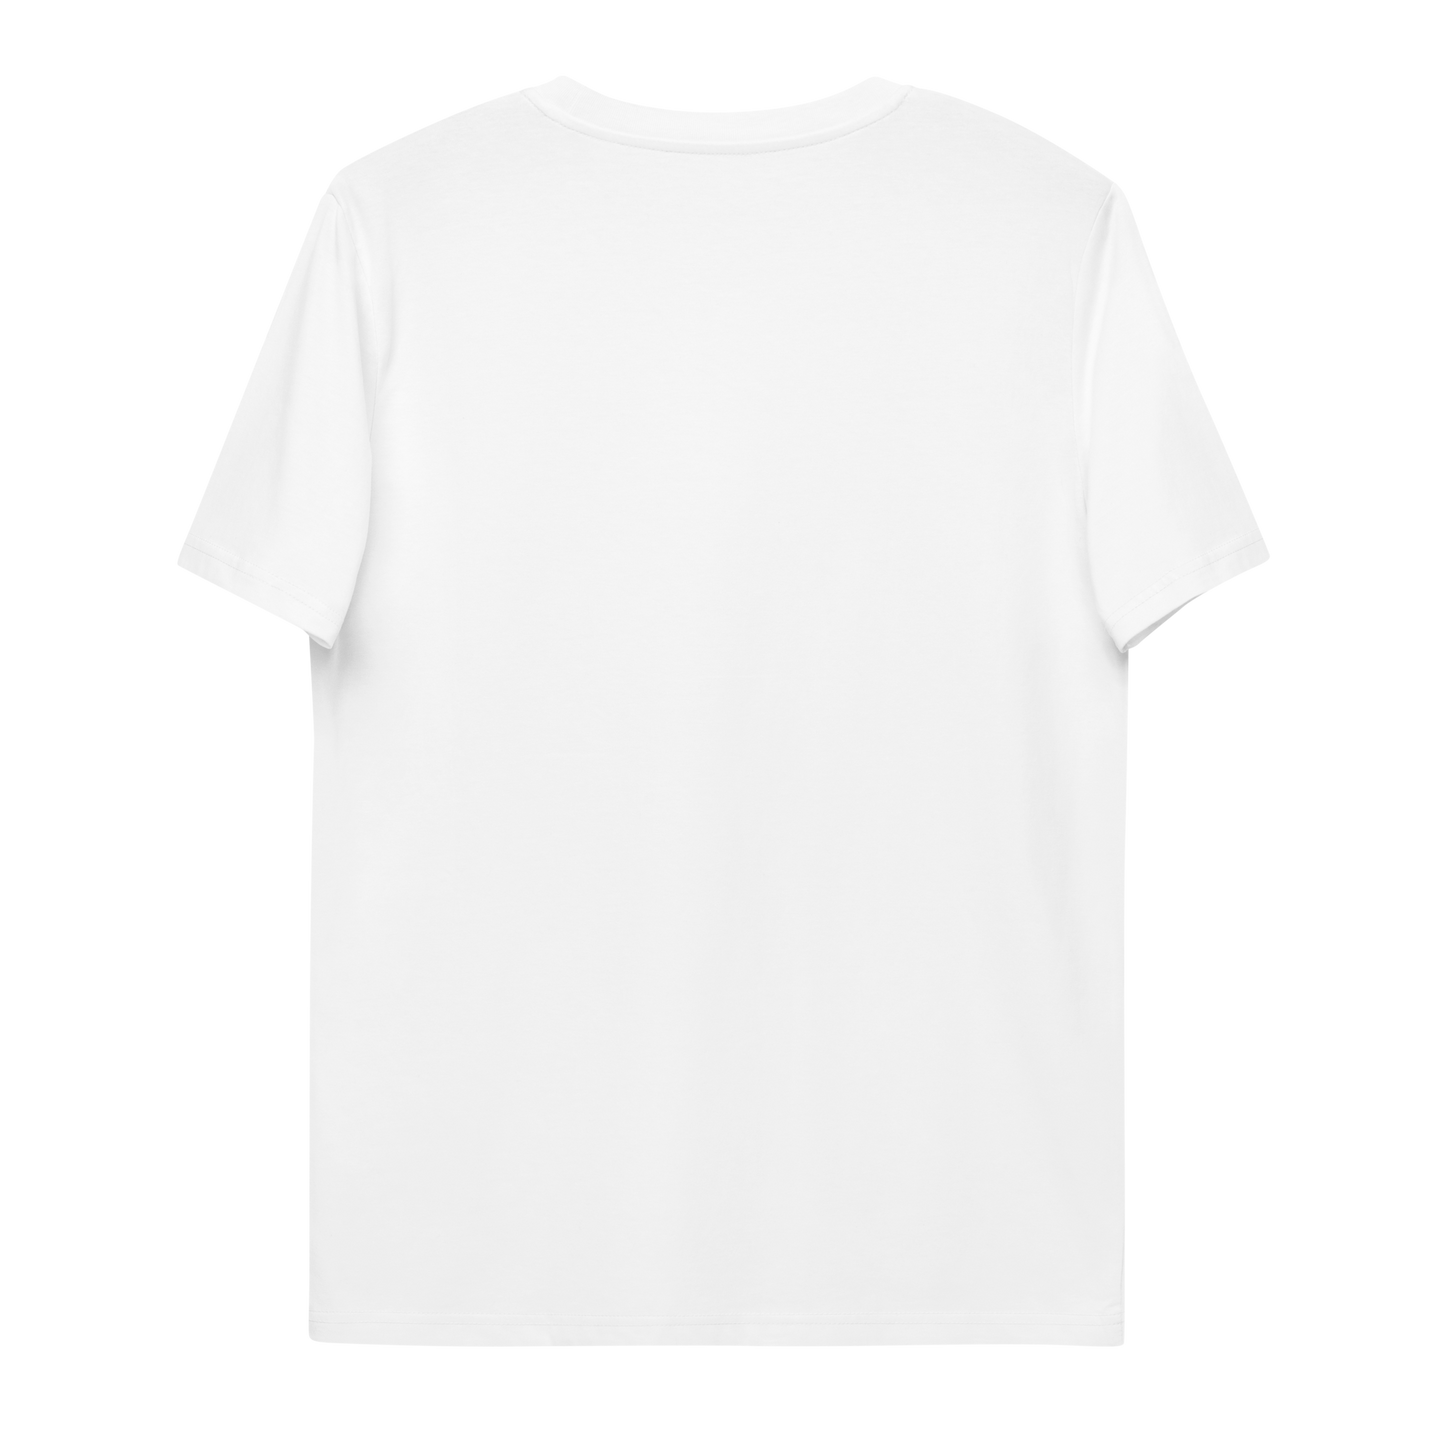 NEAR Core T-shirt—White Logo